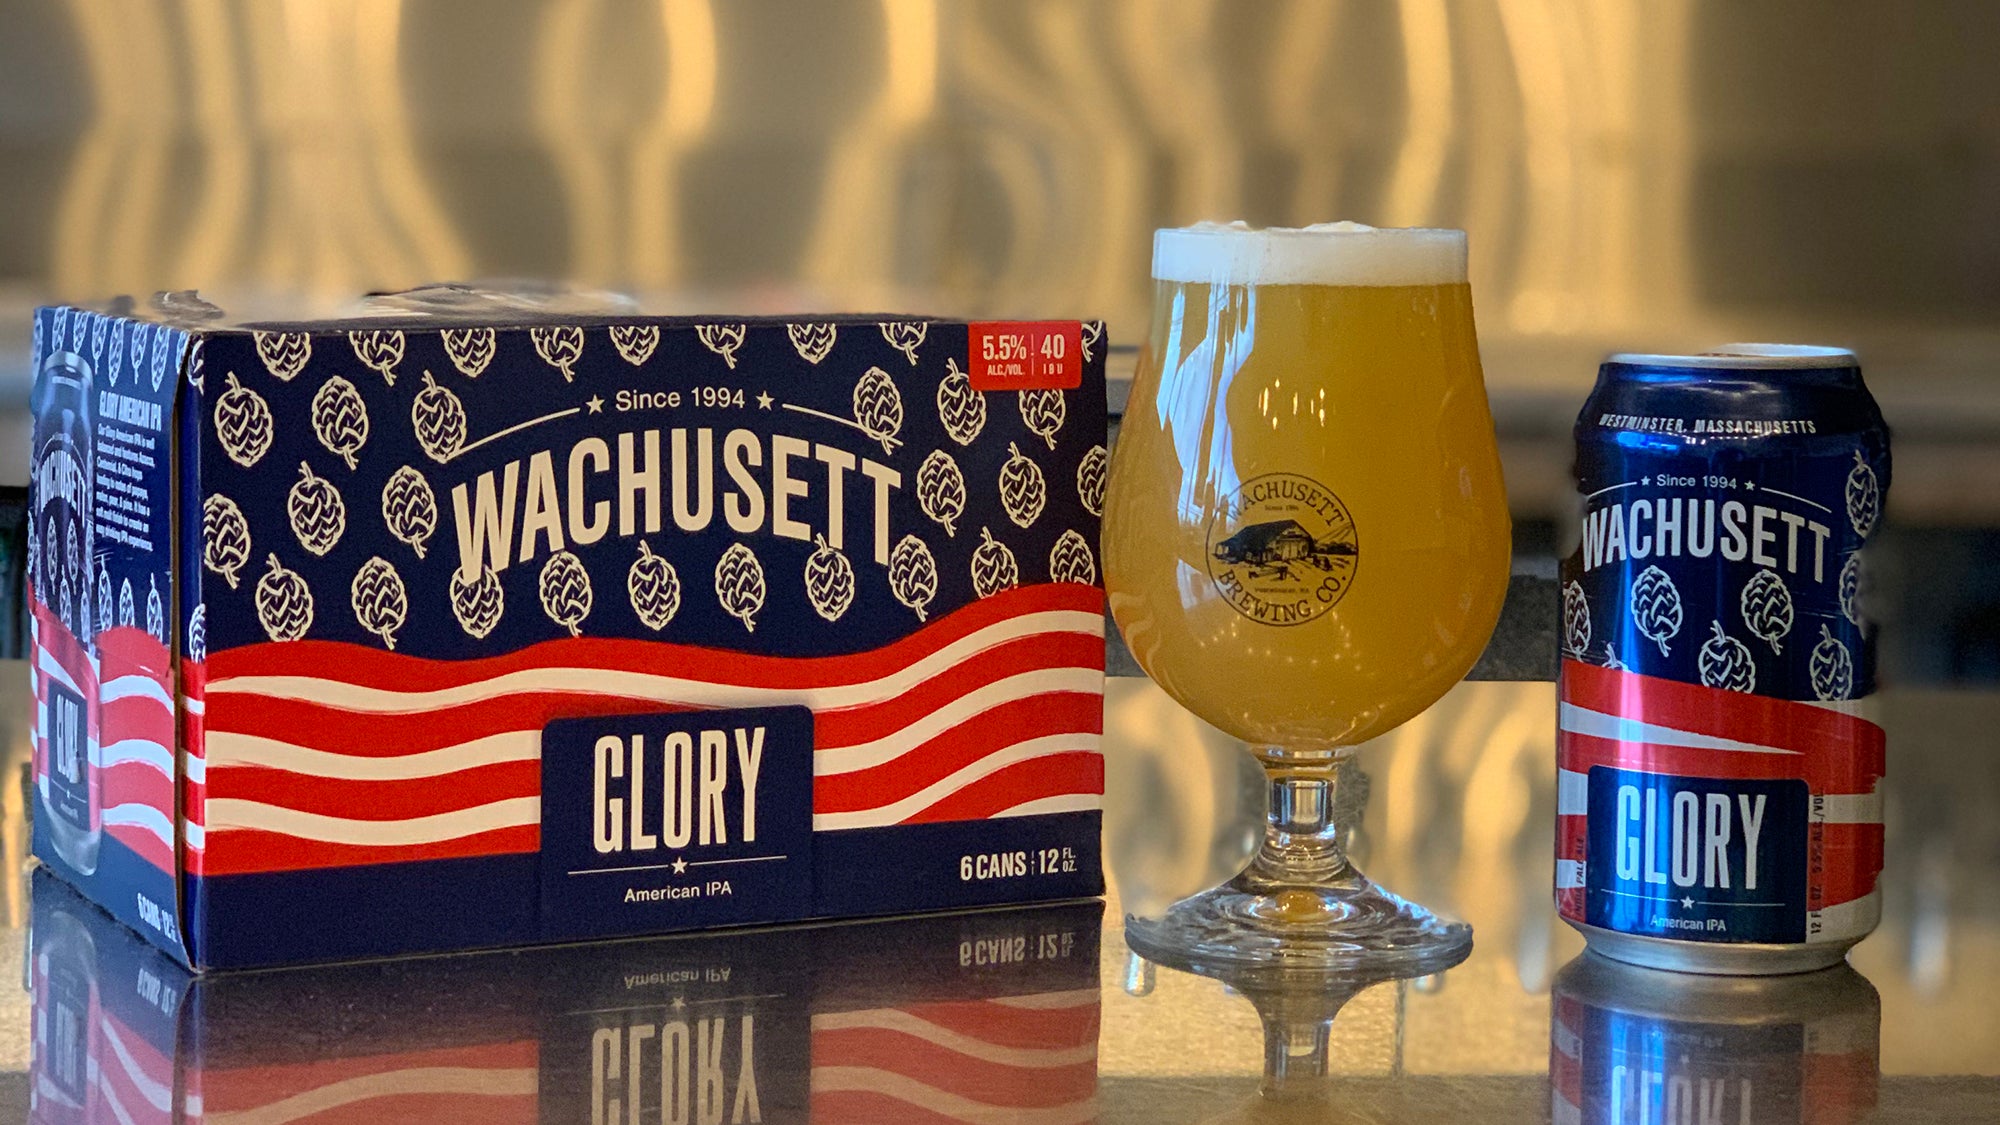 Glory from Wachusett Brewing Company